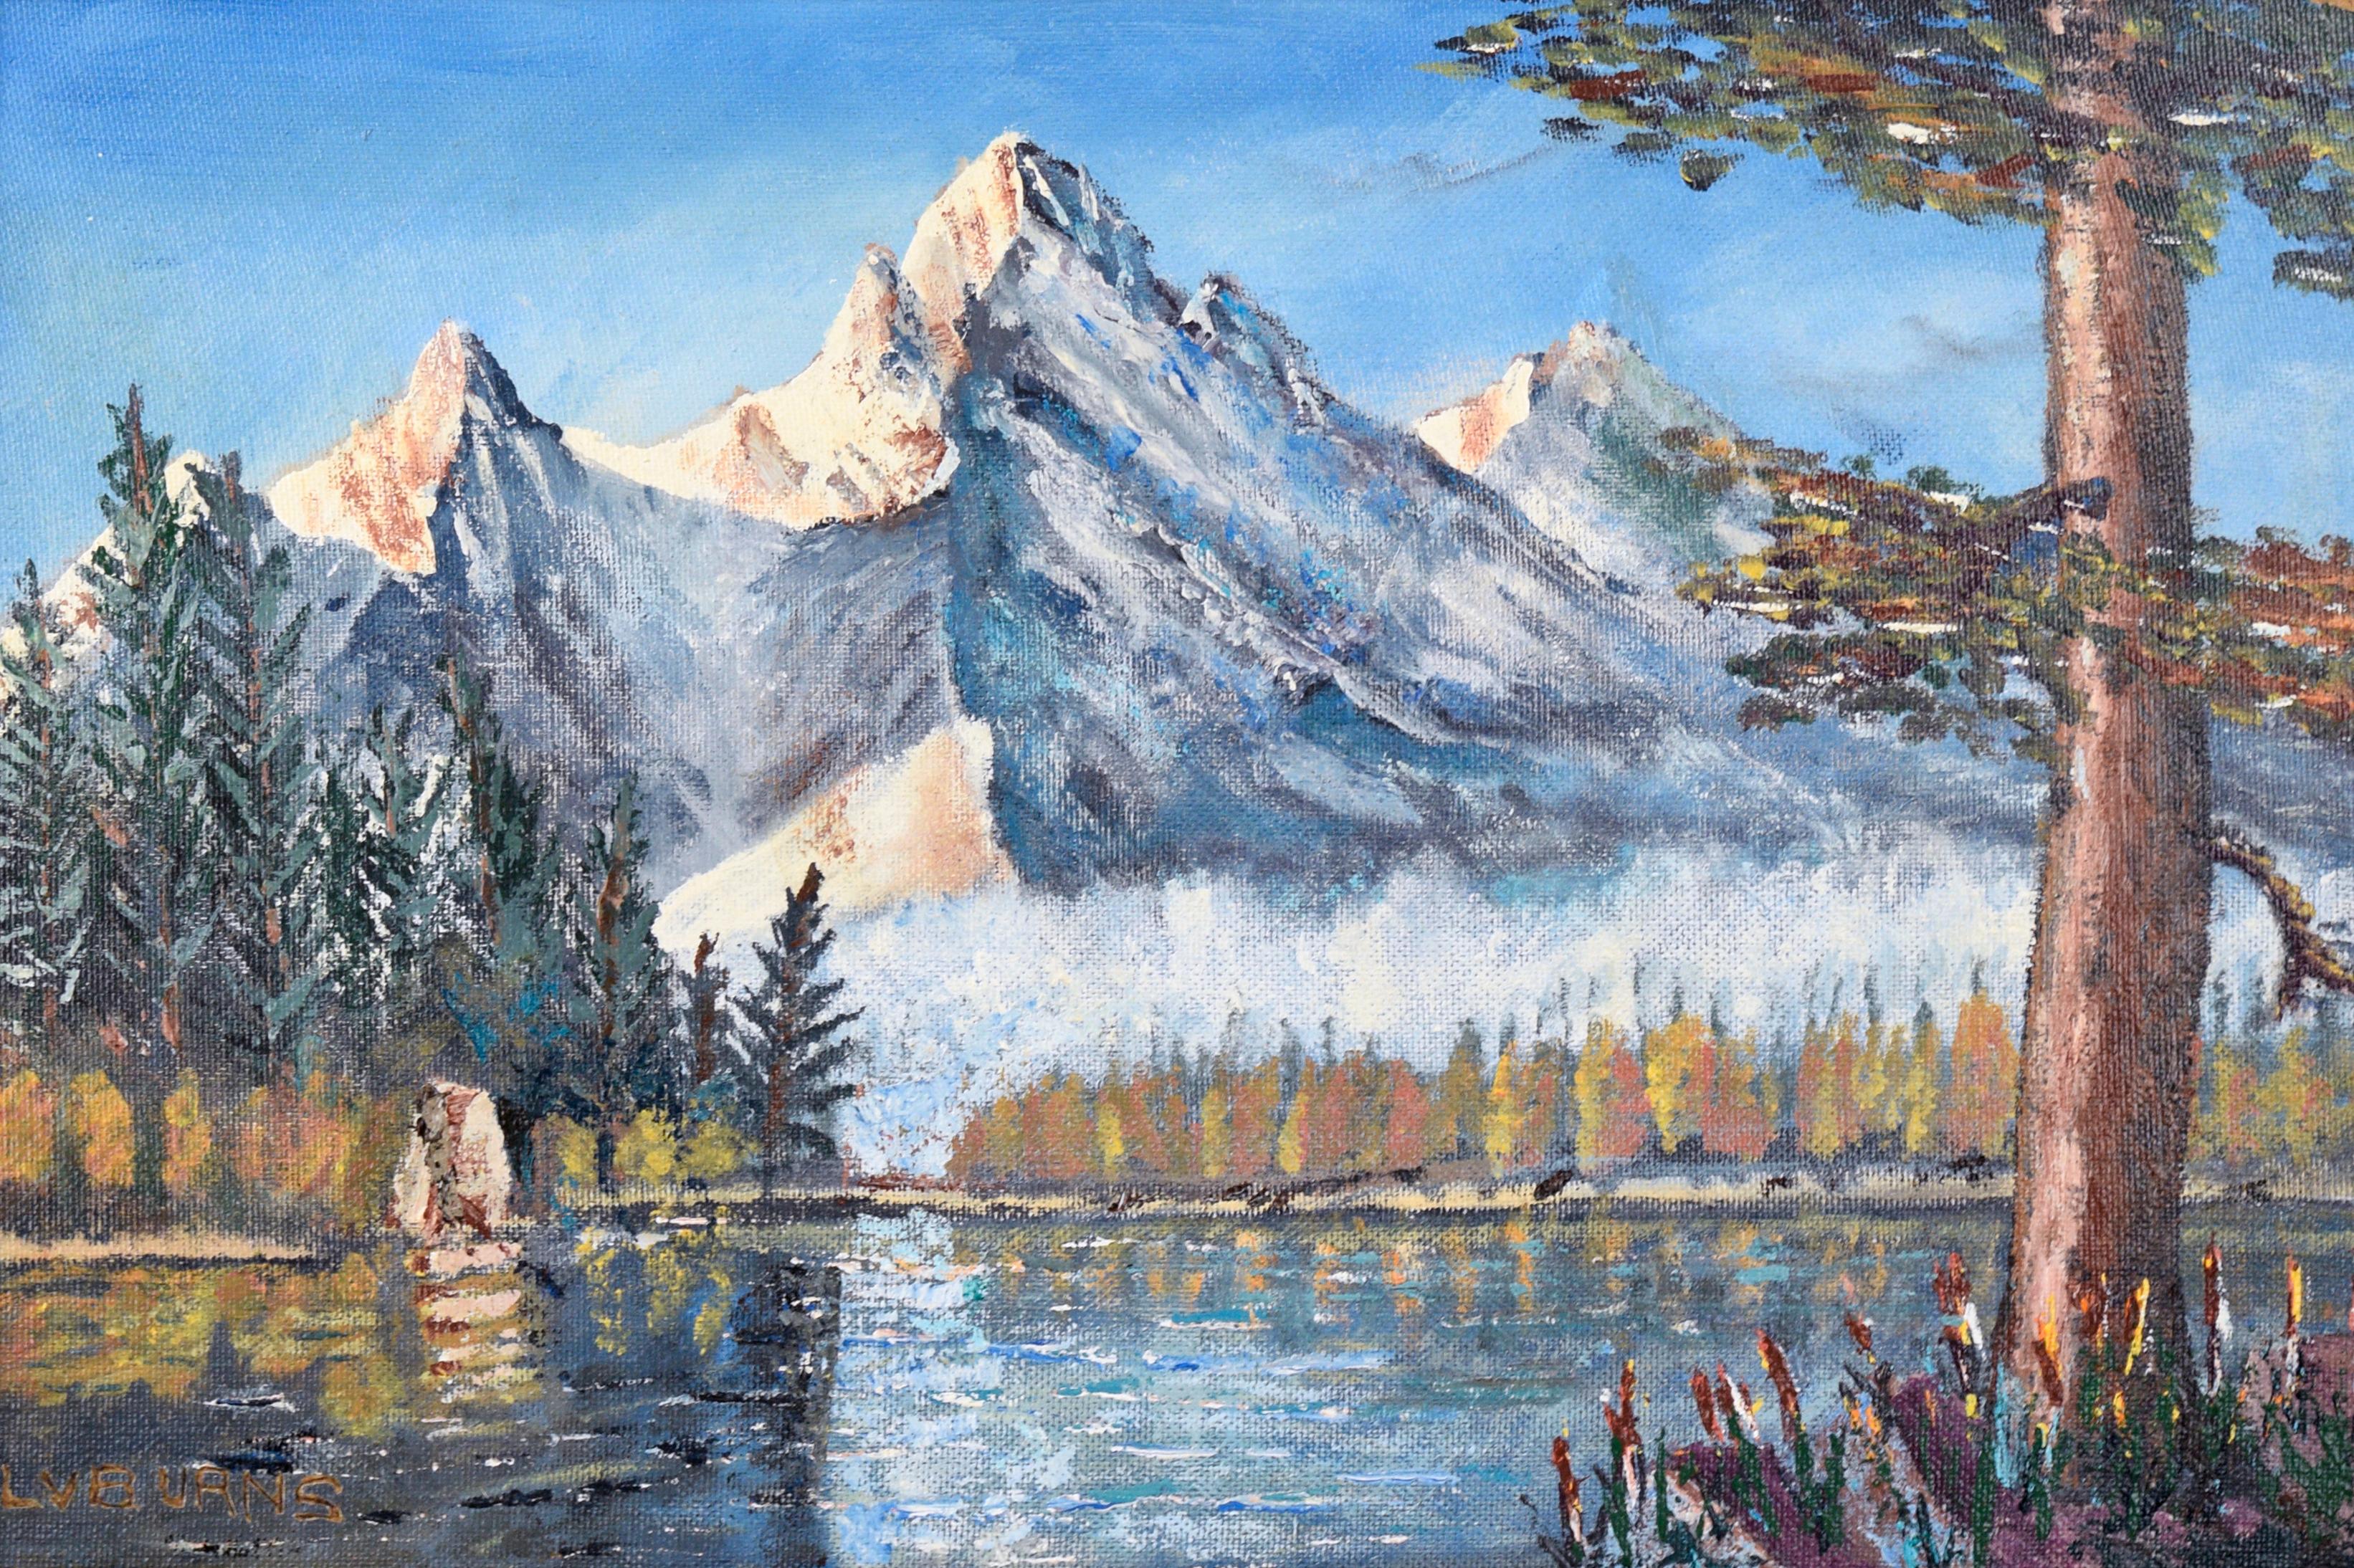 Sierra Mountain Lake Landscape by L.V. Burns - Painting by L. V. Burns